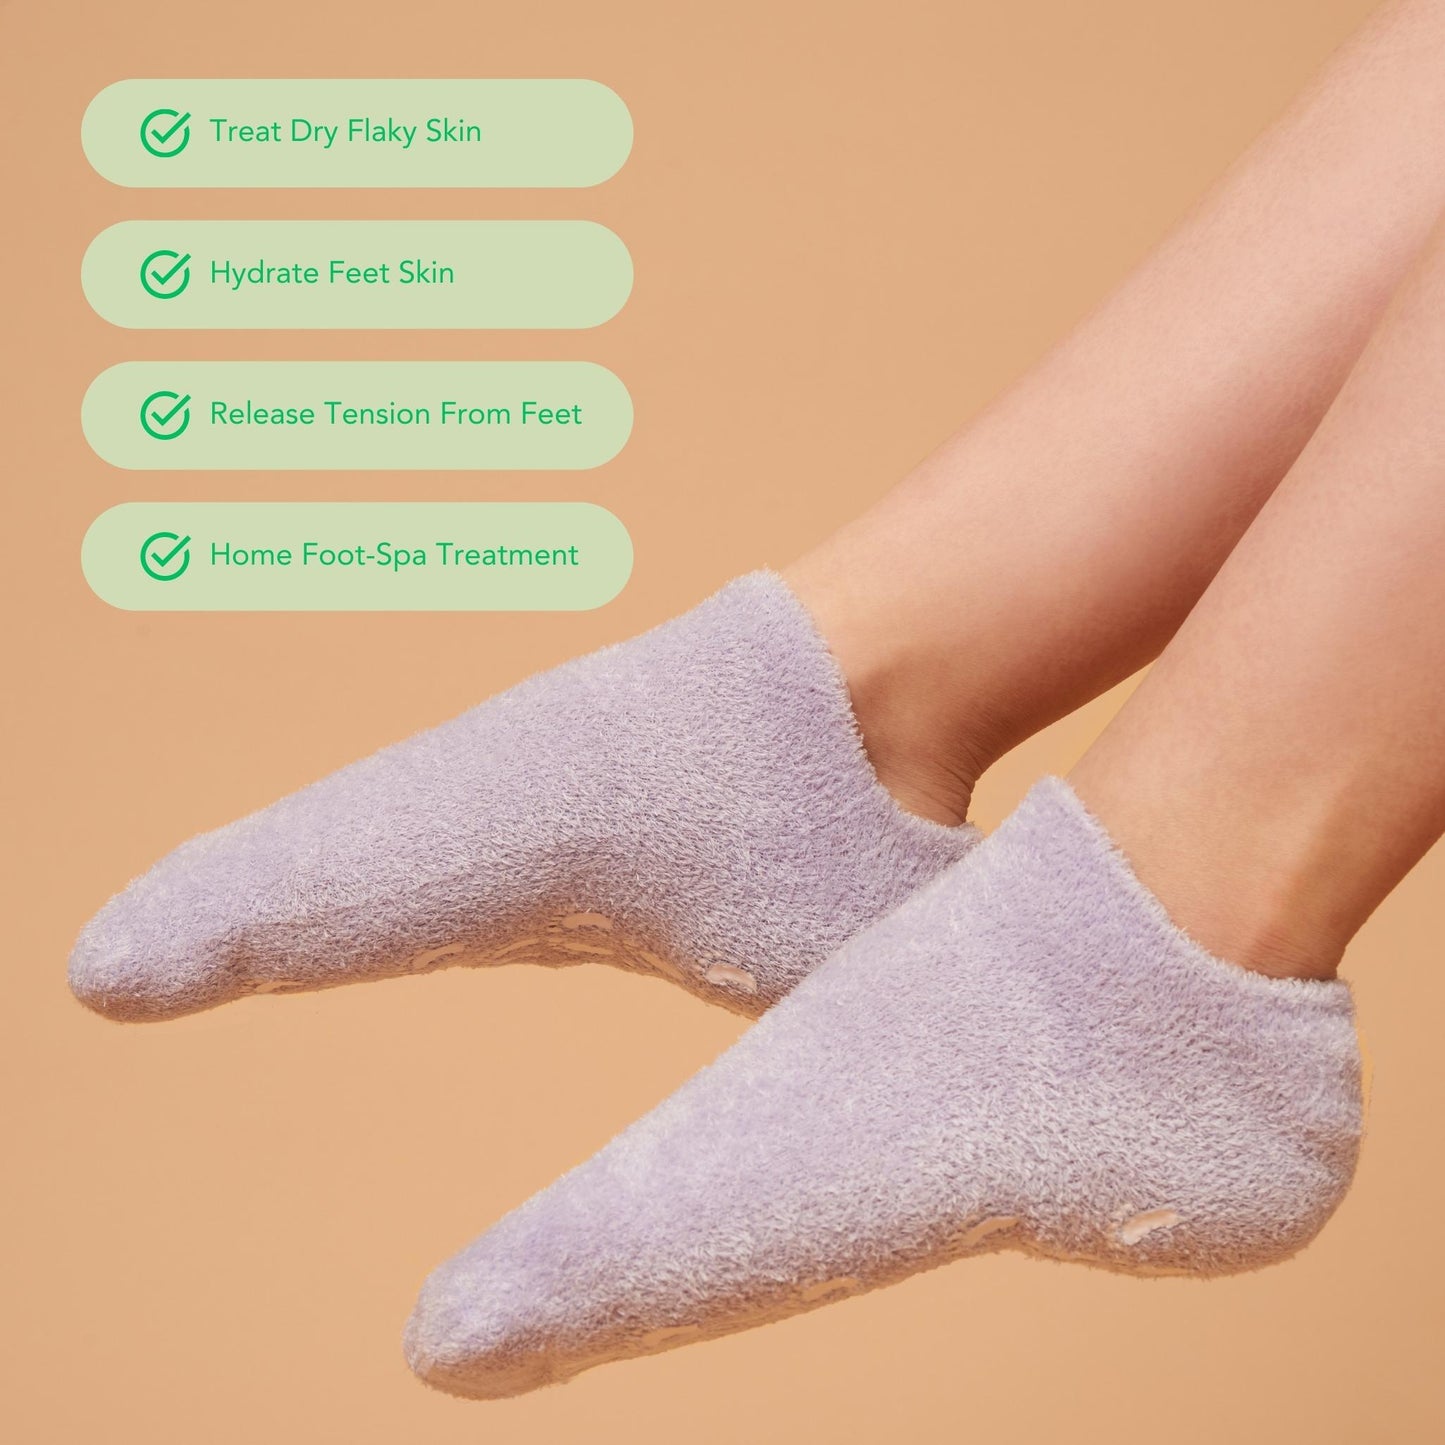 eLive Sweet Feet Duo Socks Set